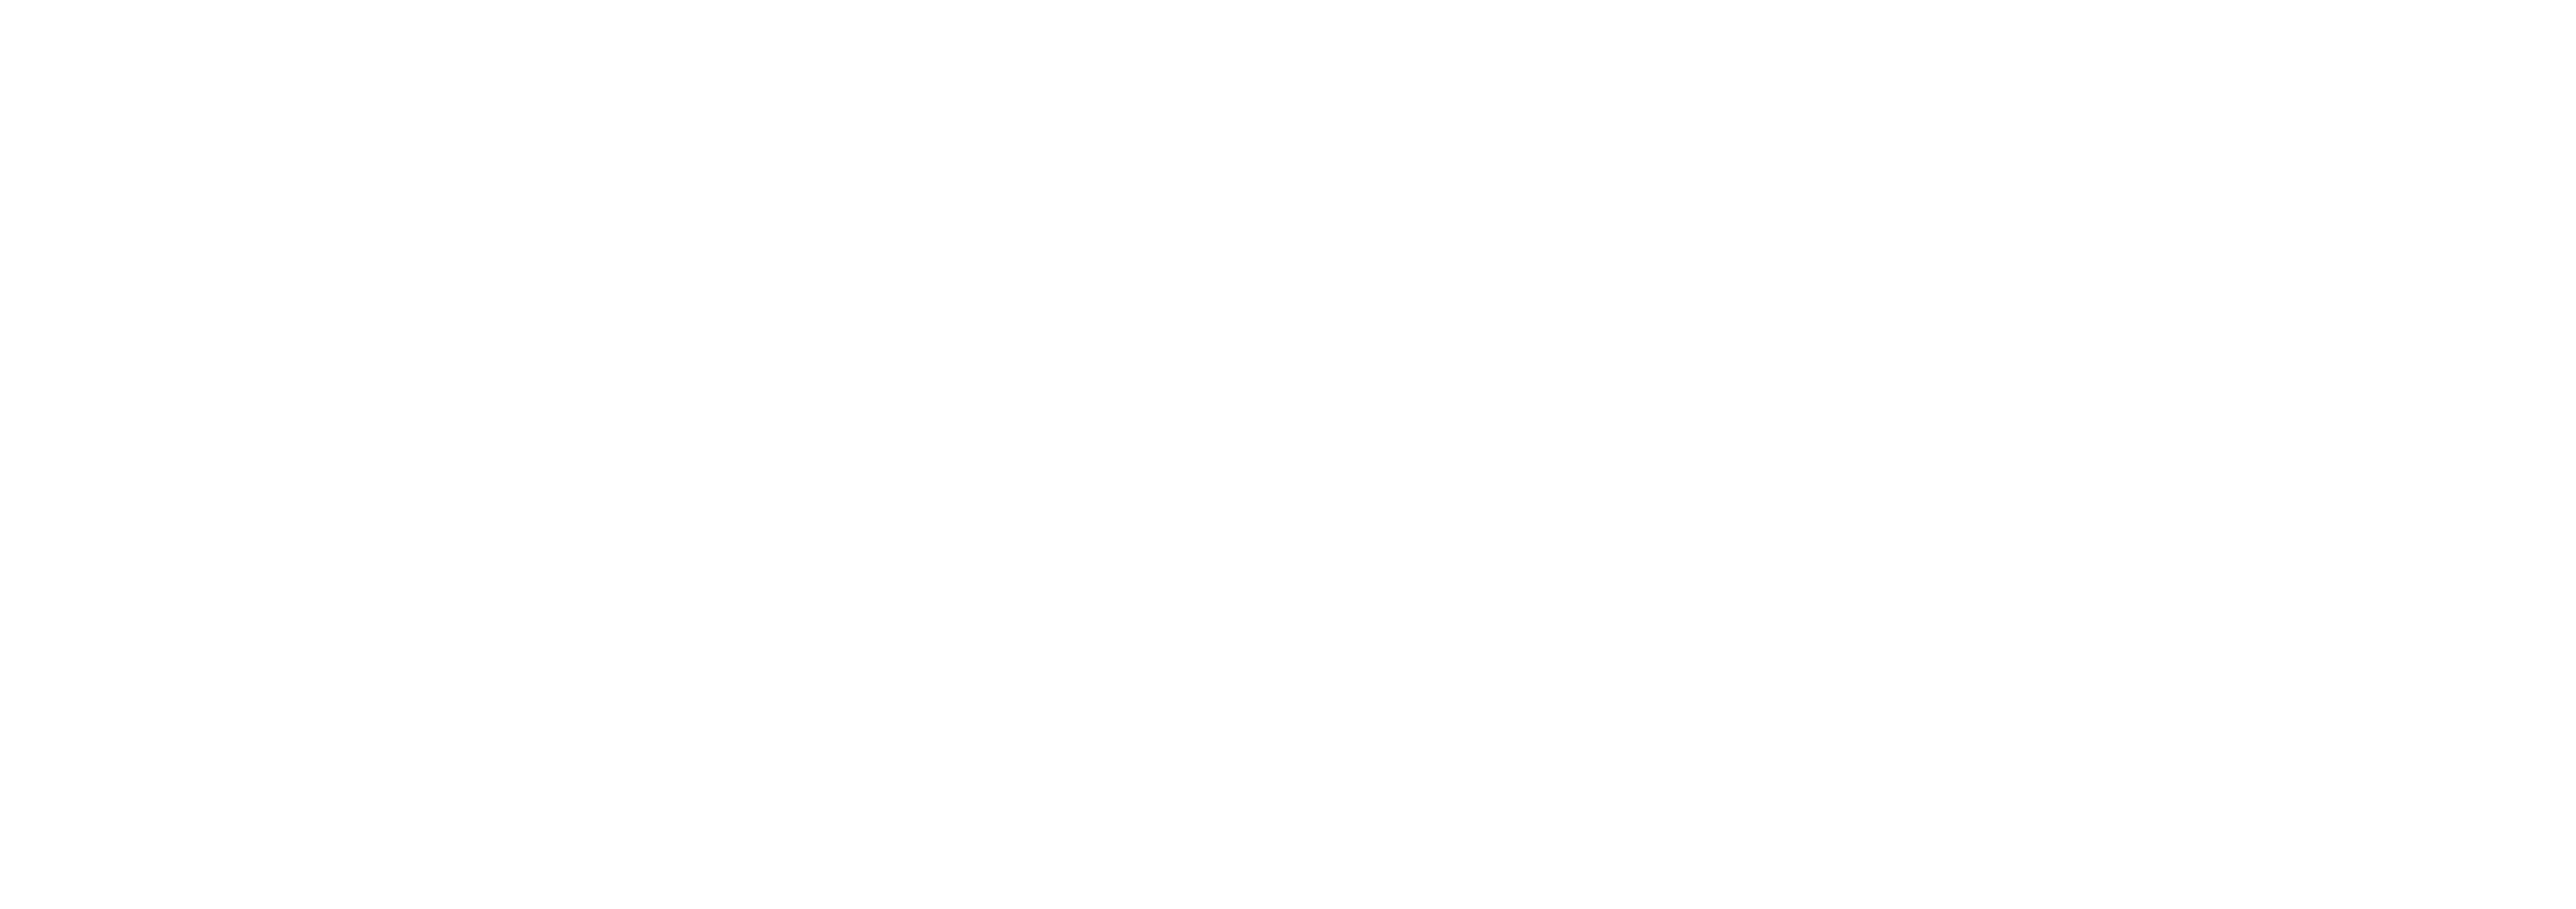 Kaydan fondation